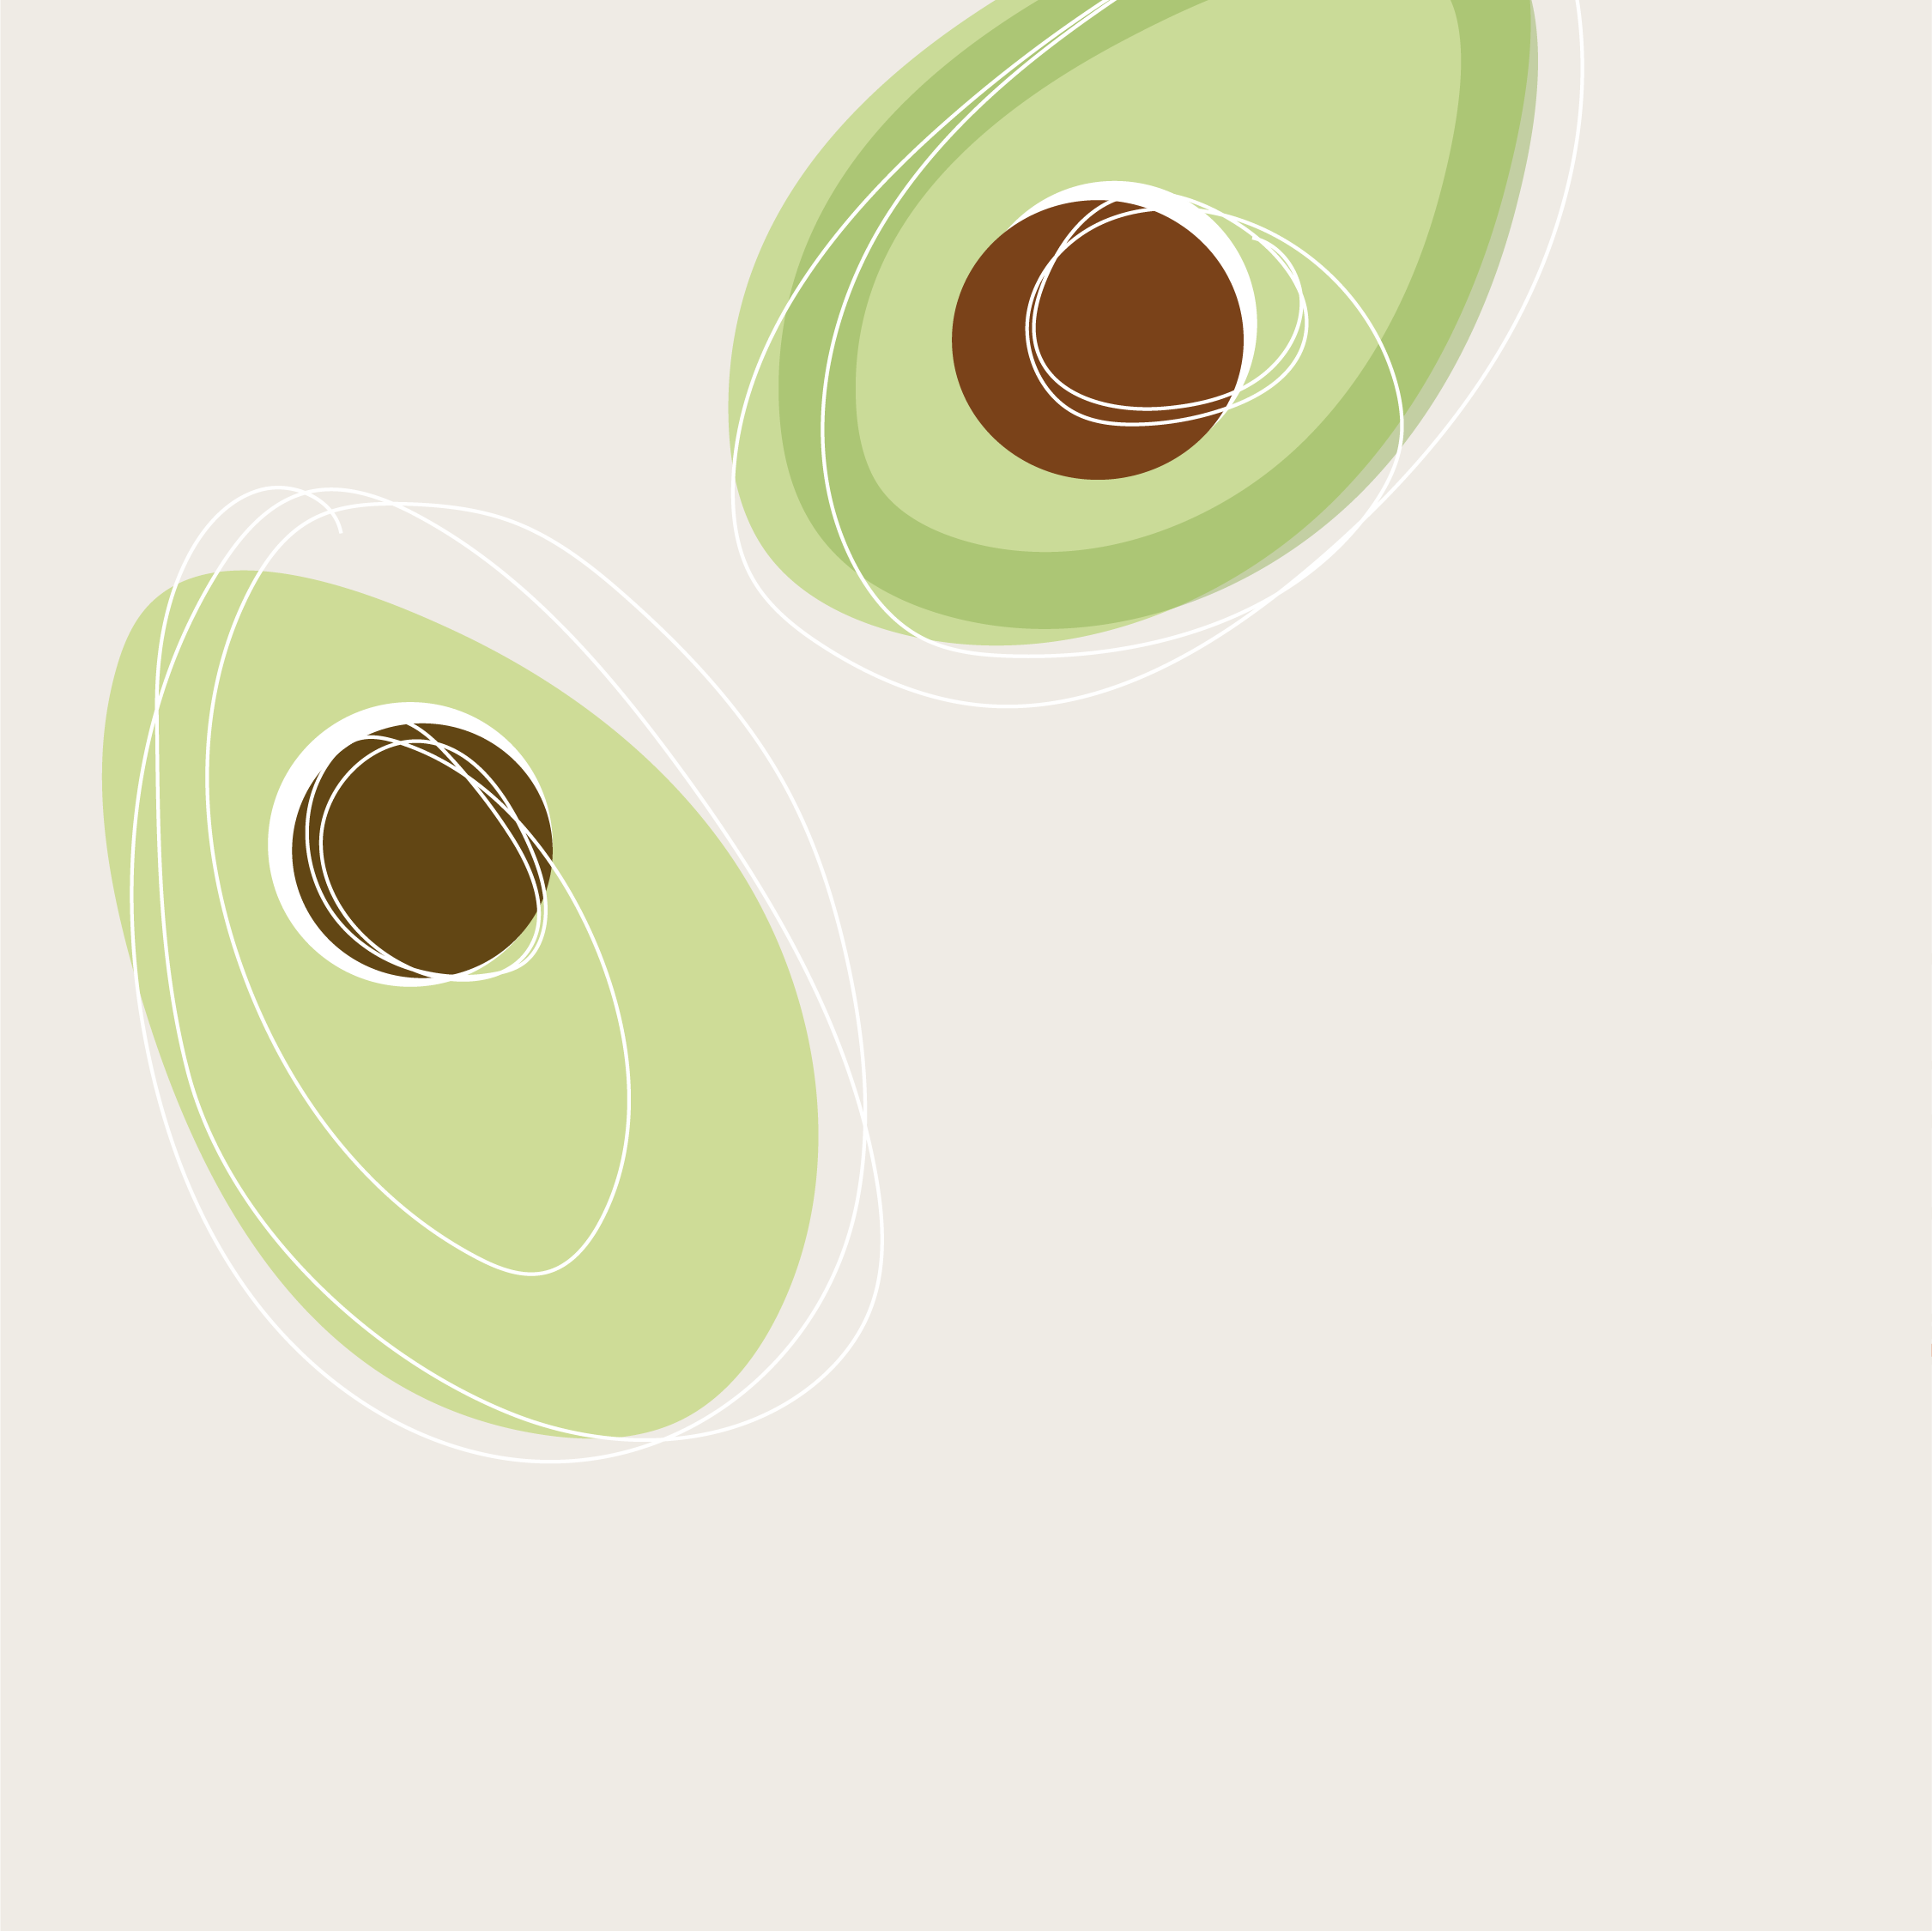 a contour illustration of avocados